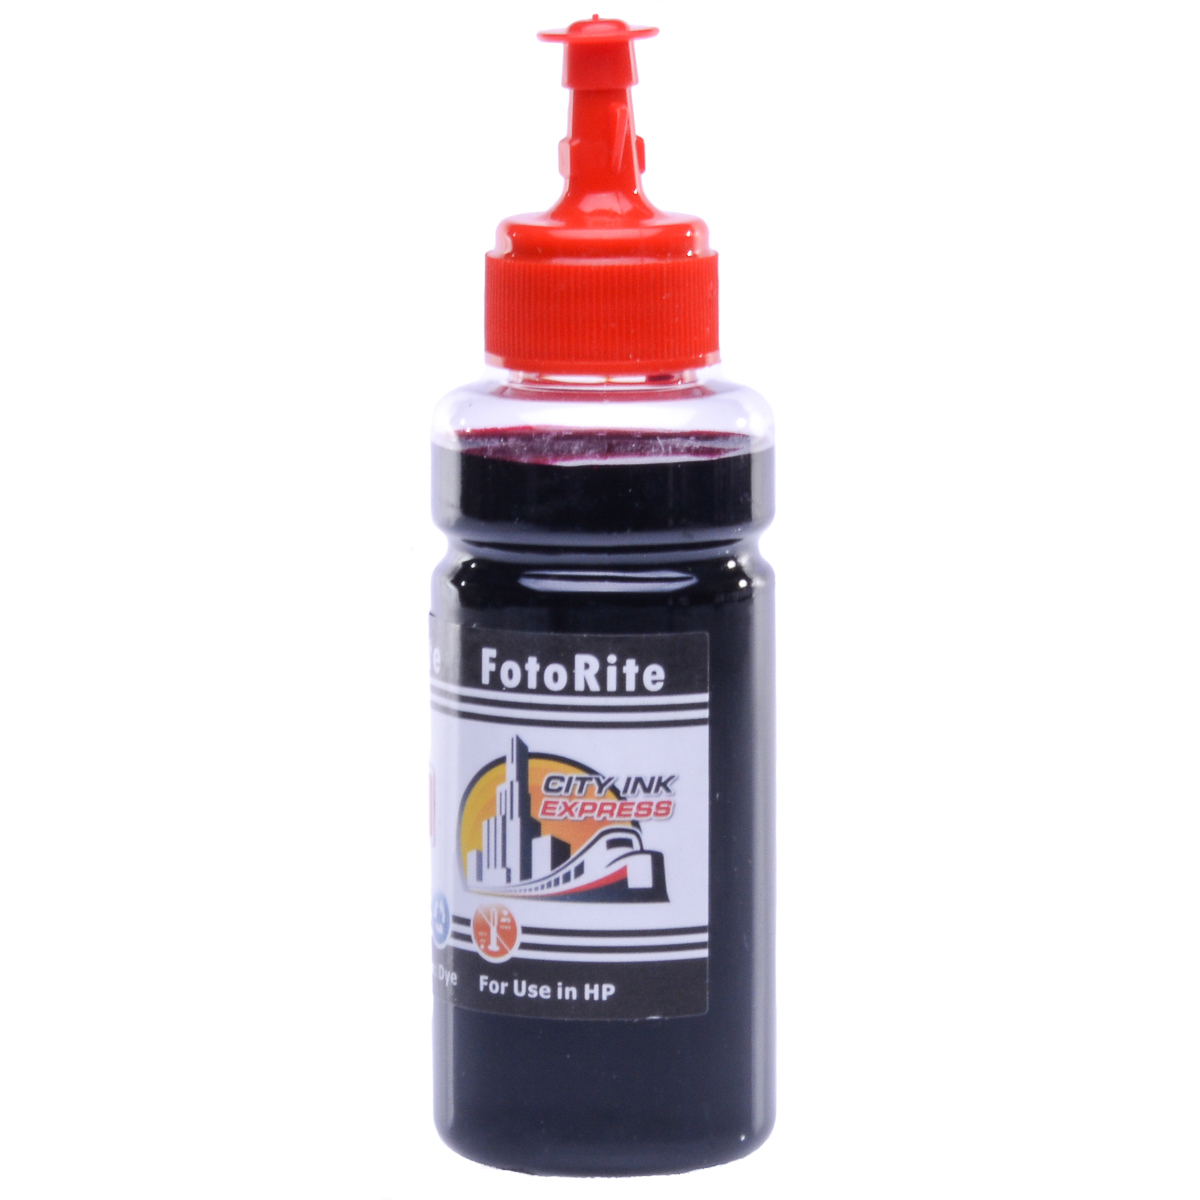 Cheap Magenta dye ink replaces HP Photosmart C410A - HP 364